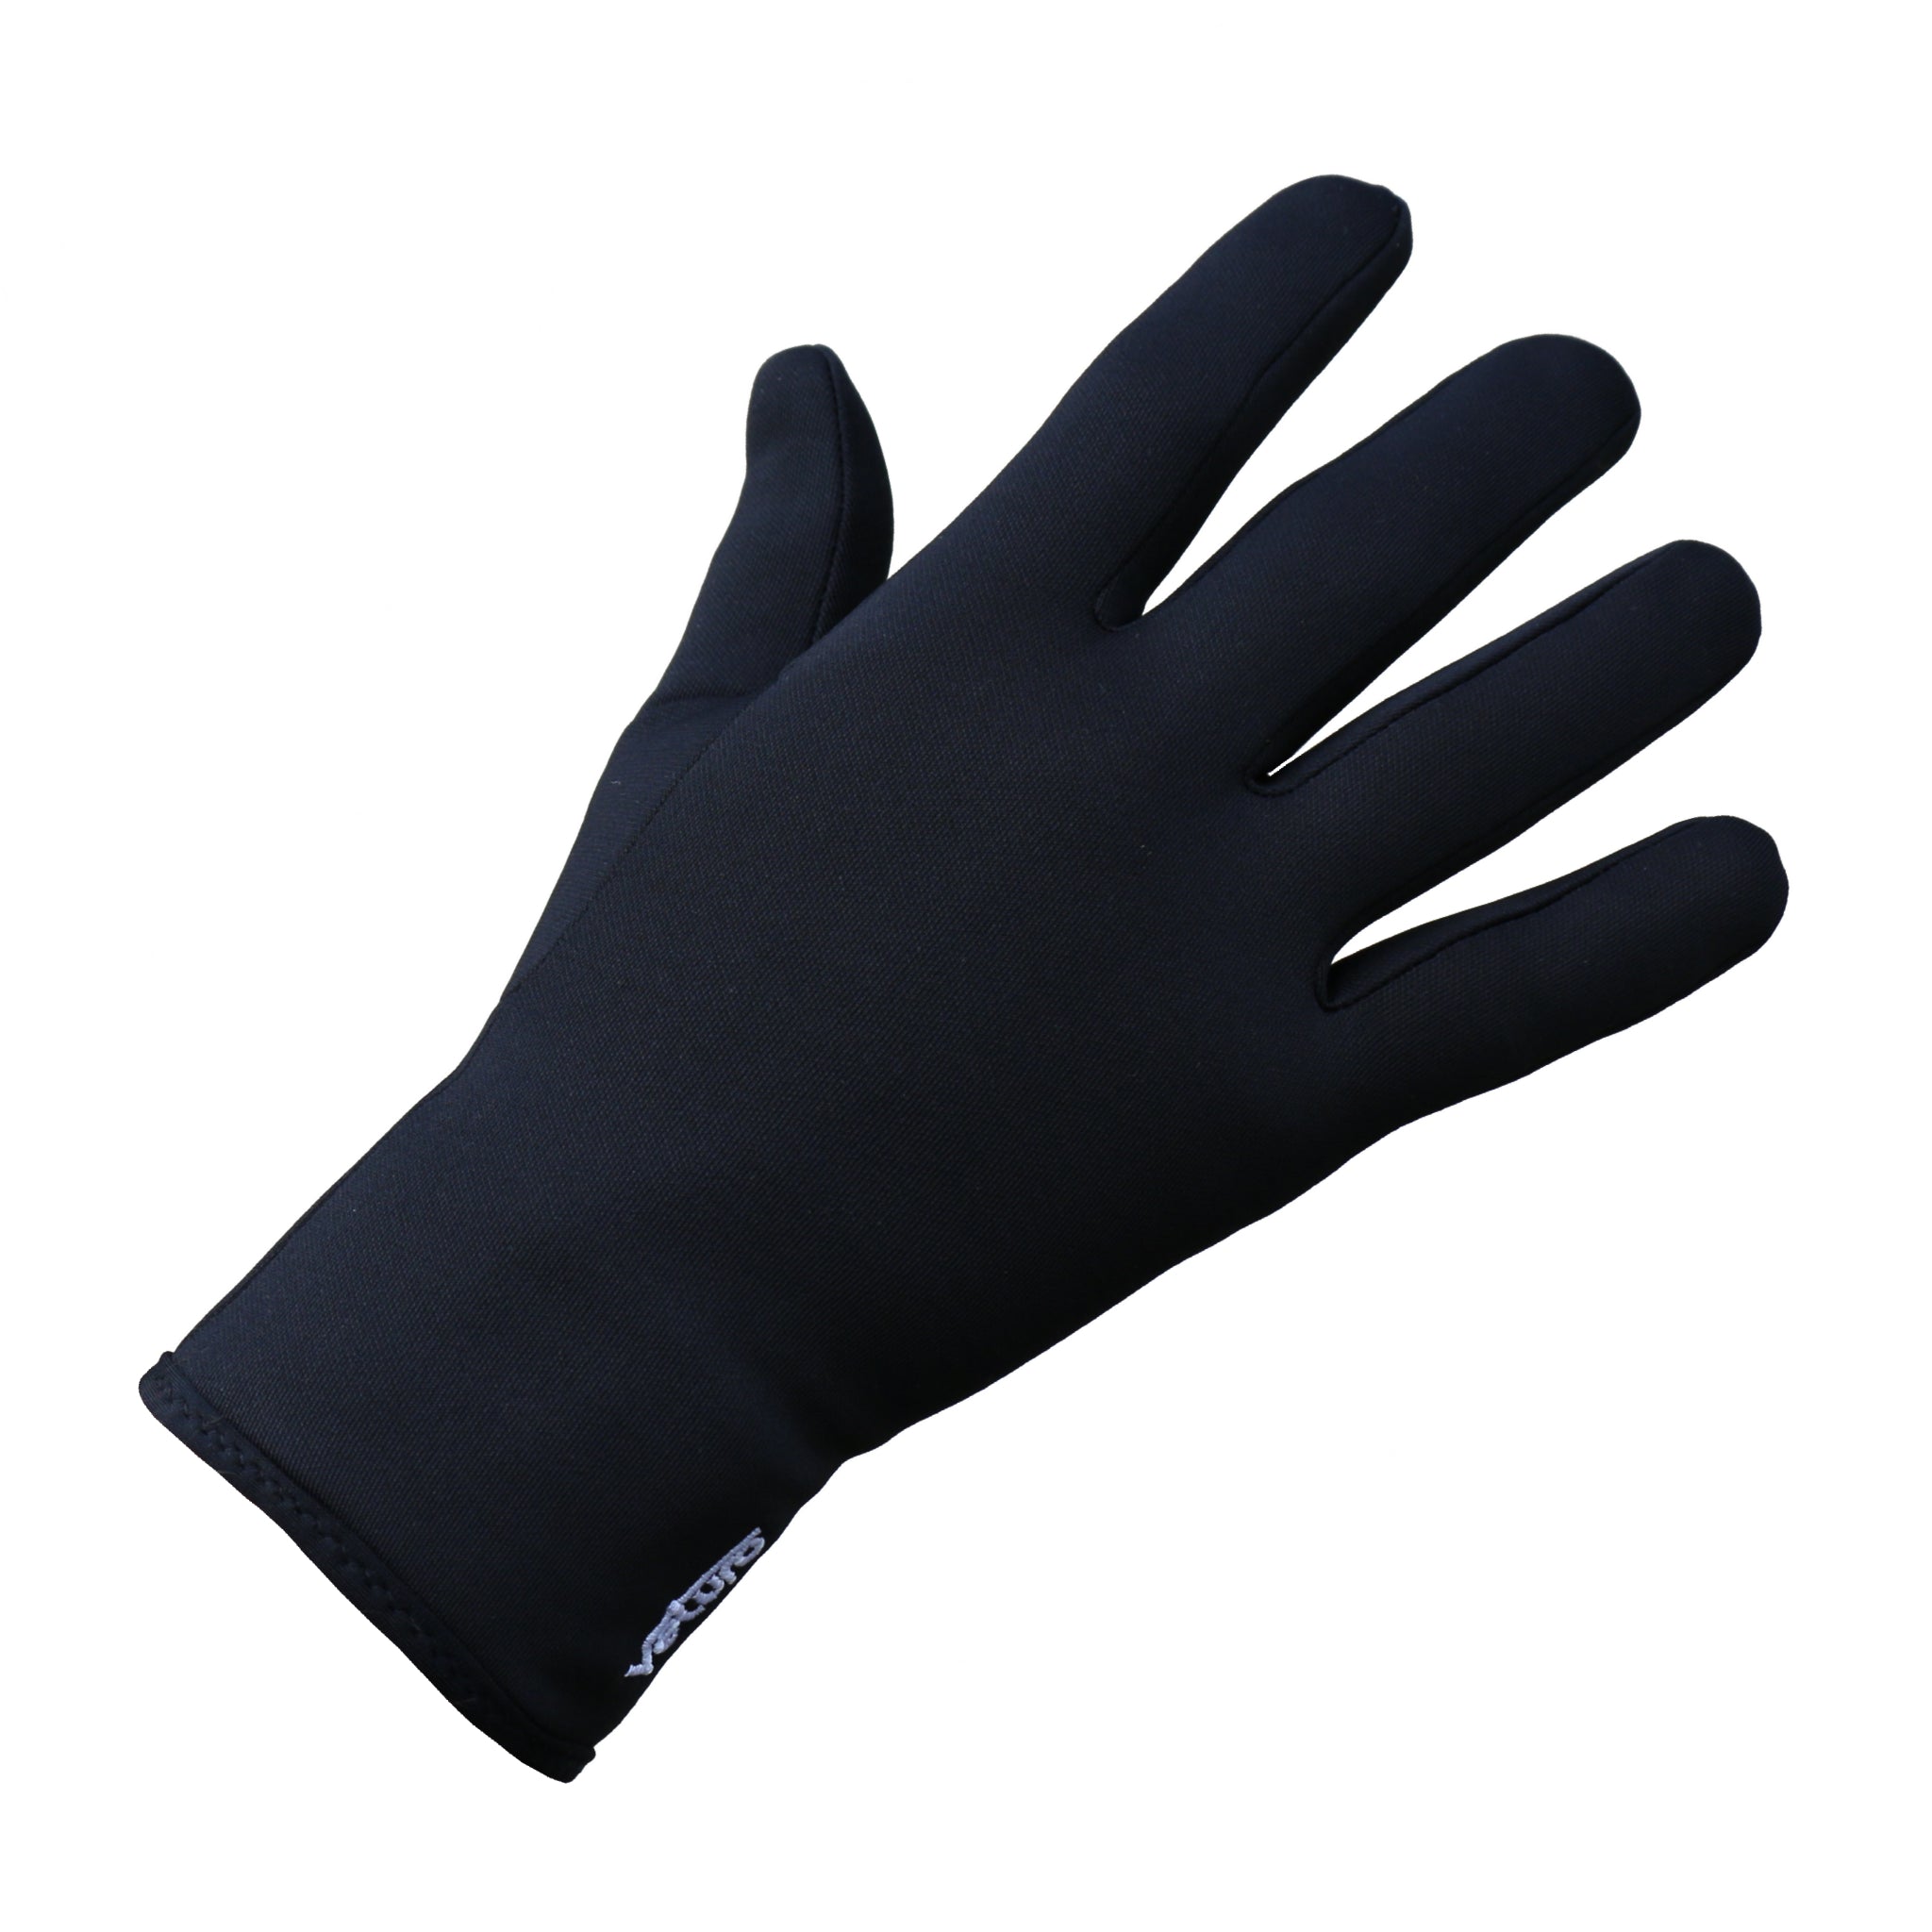 Infrared Fleece Gloves Palm Grip Keep Hands Warm